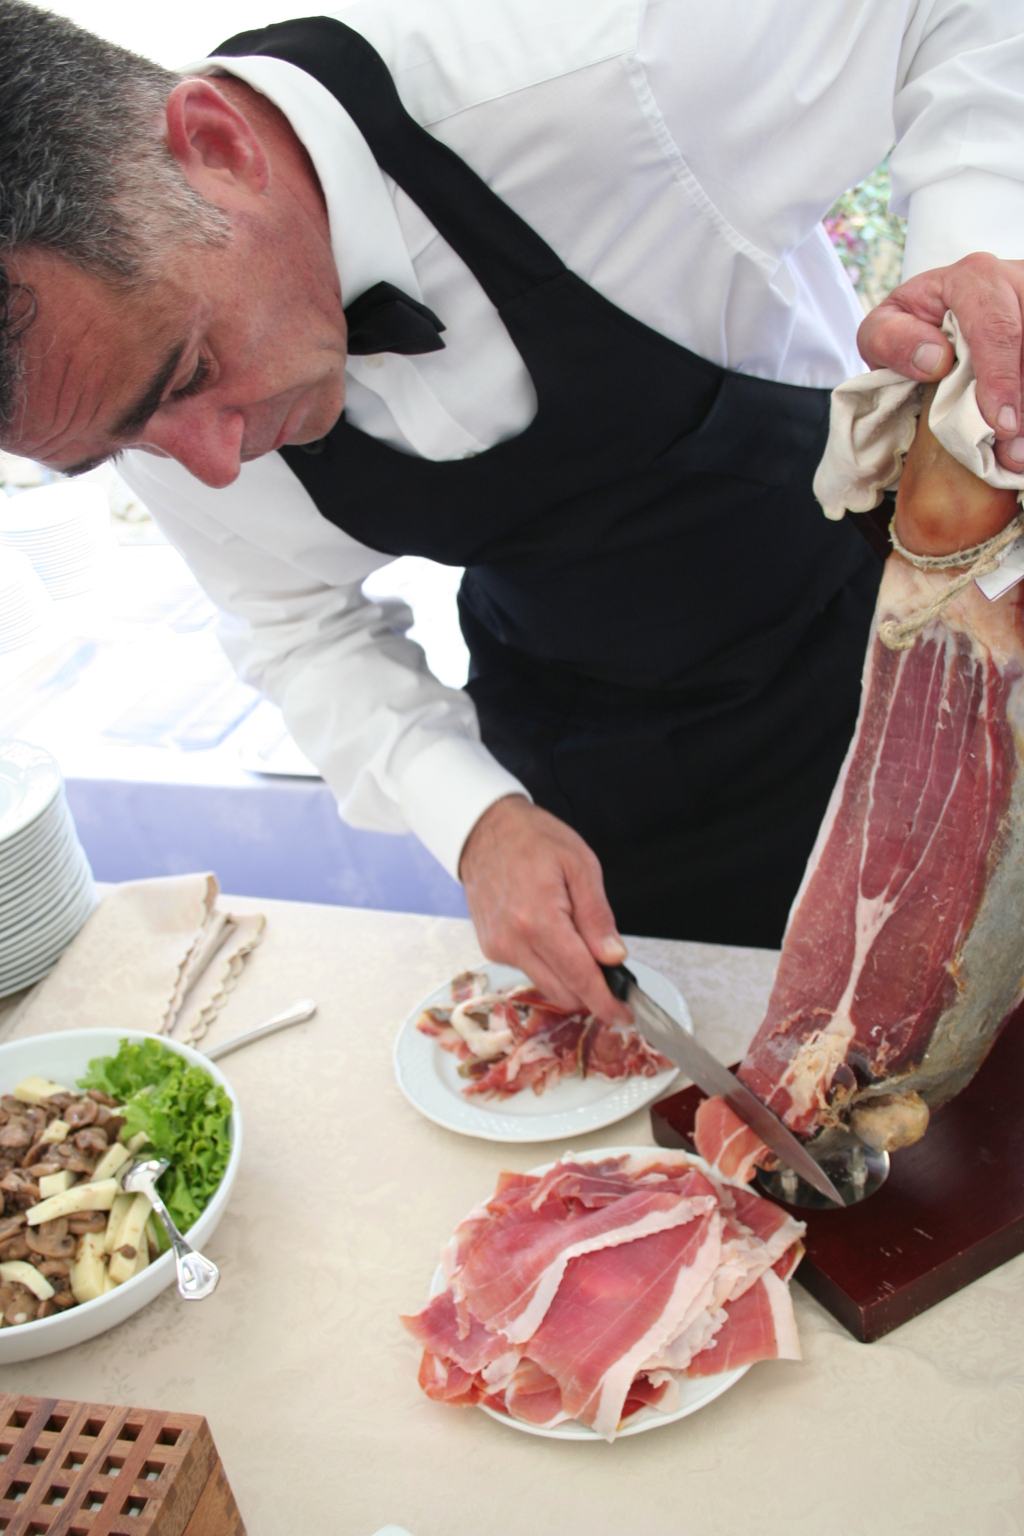 Tuscan ham sliced by hand